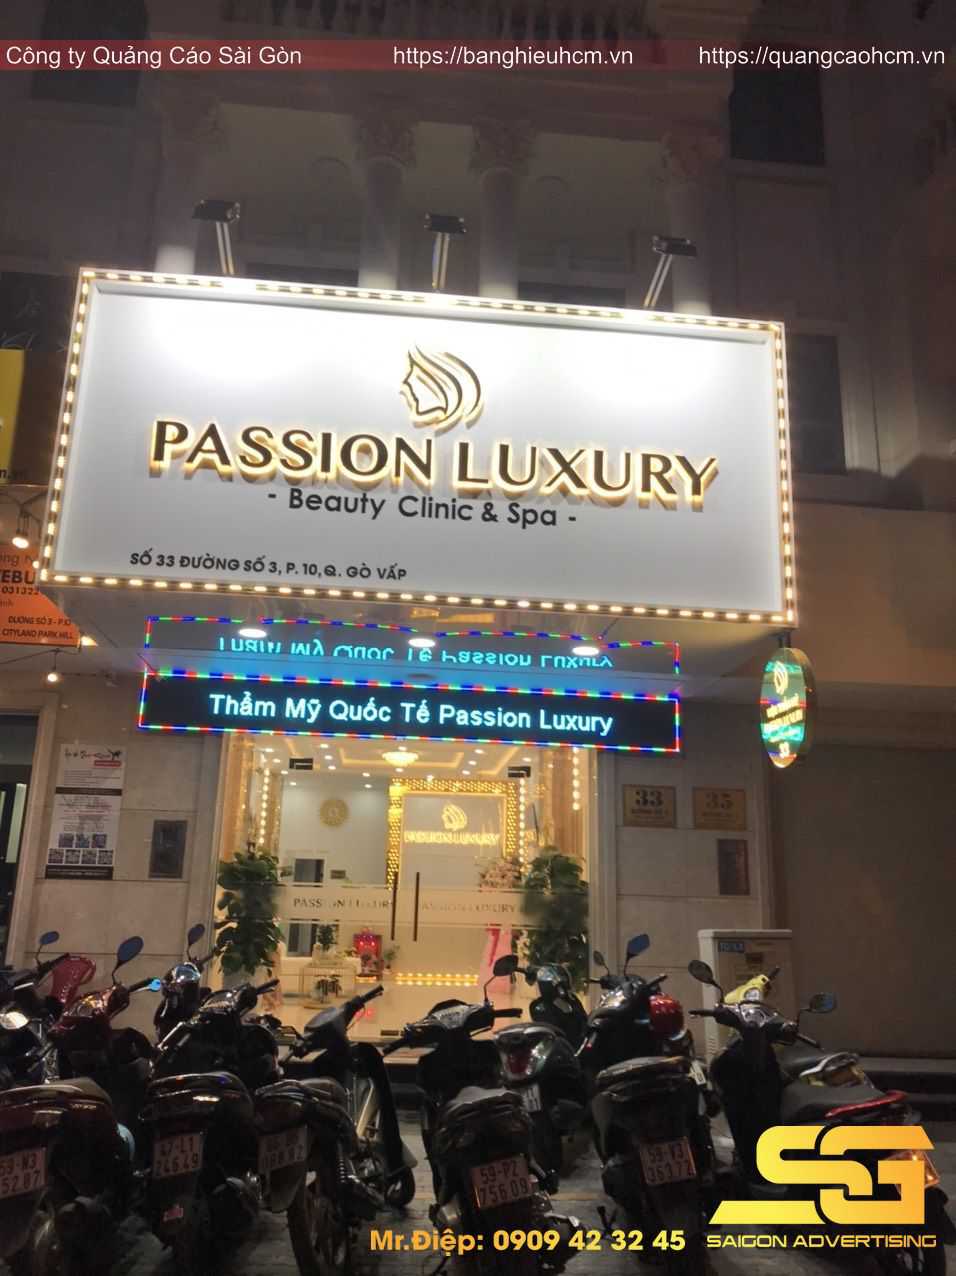 Bảng hiệu Alu spa Passion Luxury